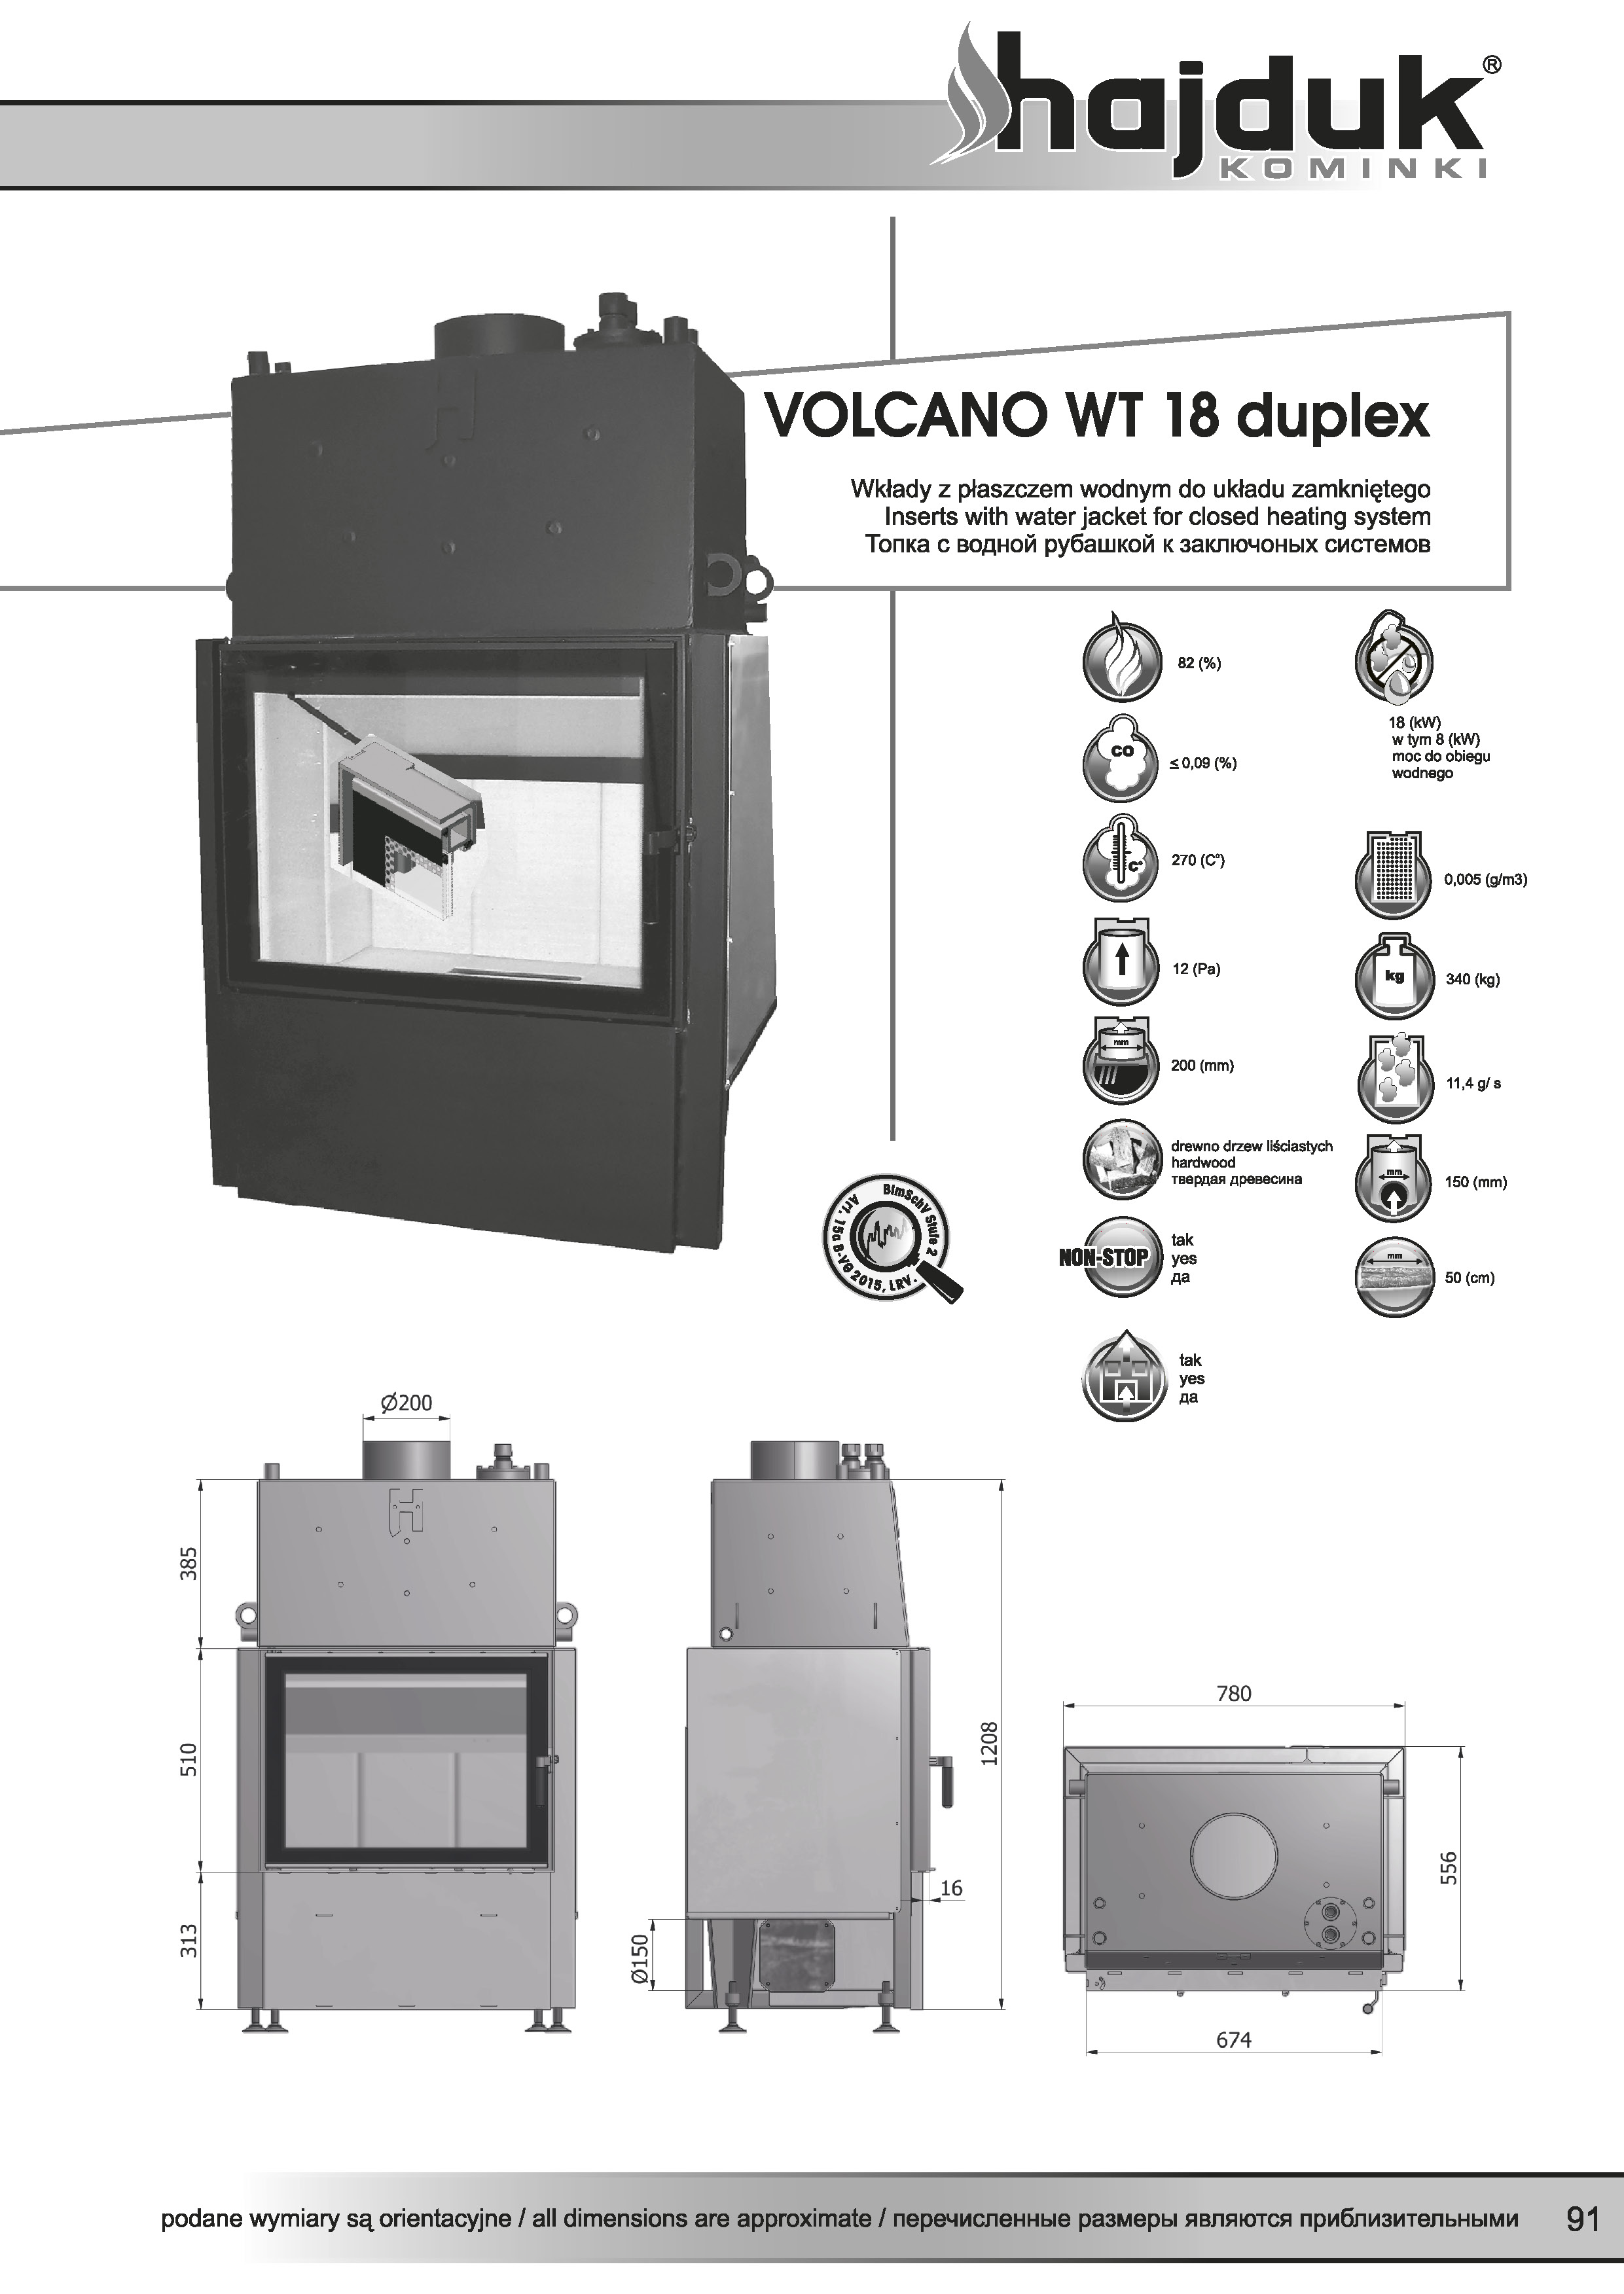 Volcano%20WT 18%20duplex%20 %20karta%20techniczna - Wasserführende Kamineinsätz Hajduk  Volcano WT 18